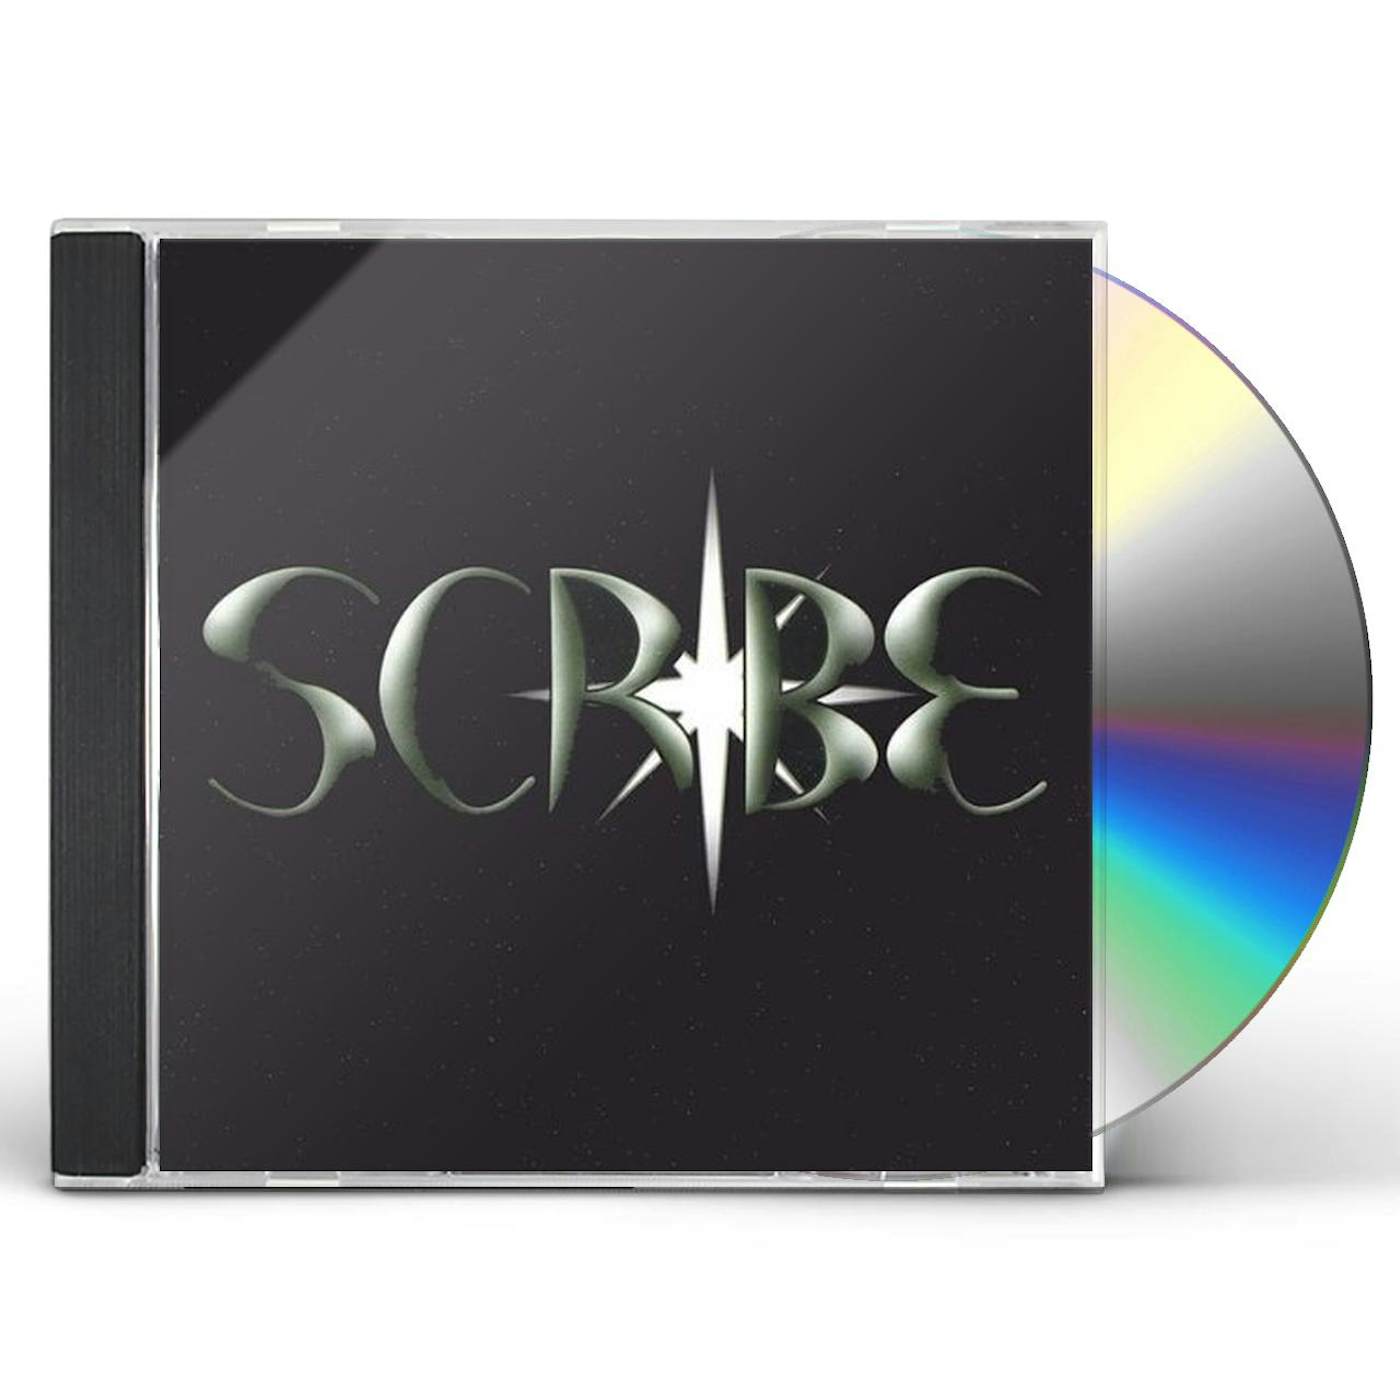 SCRIBE CD